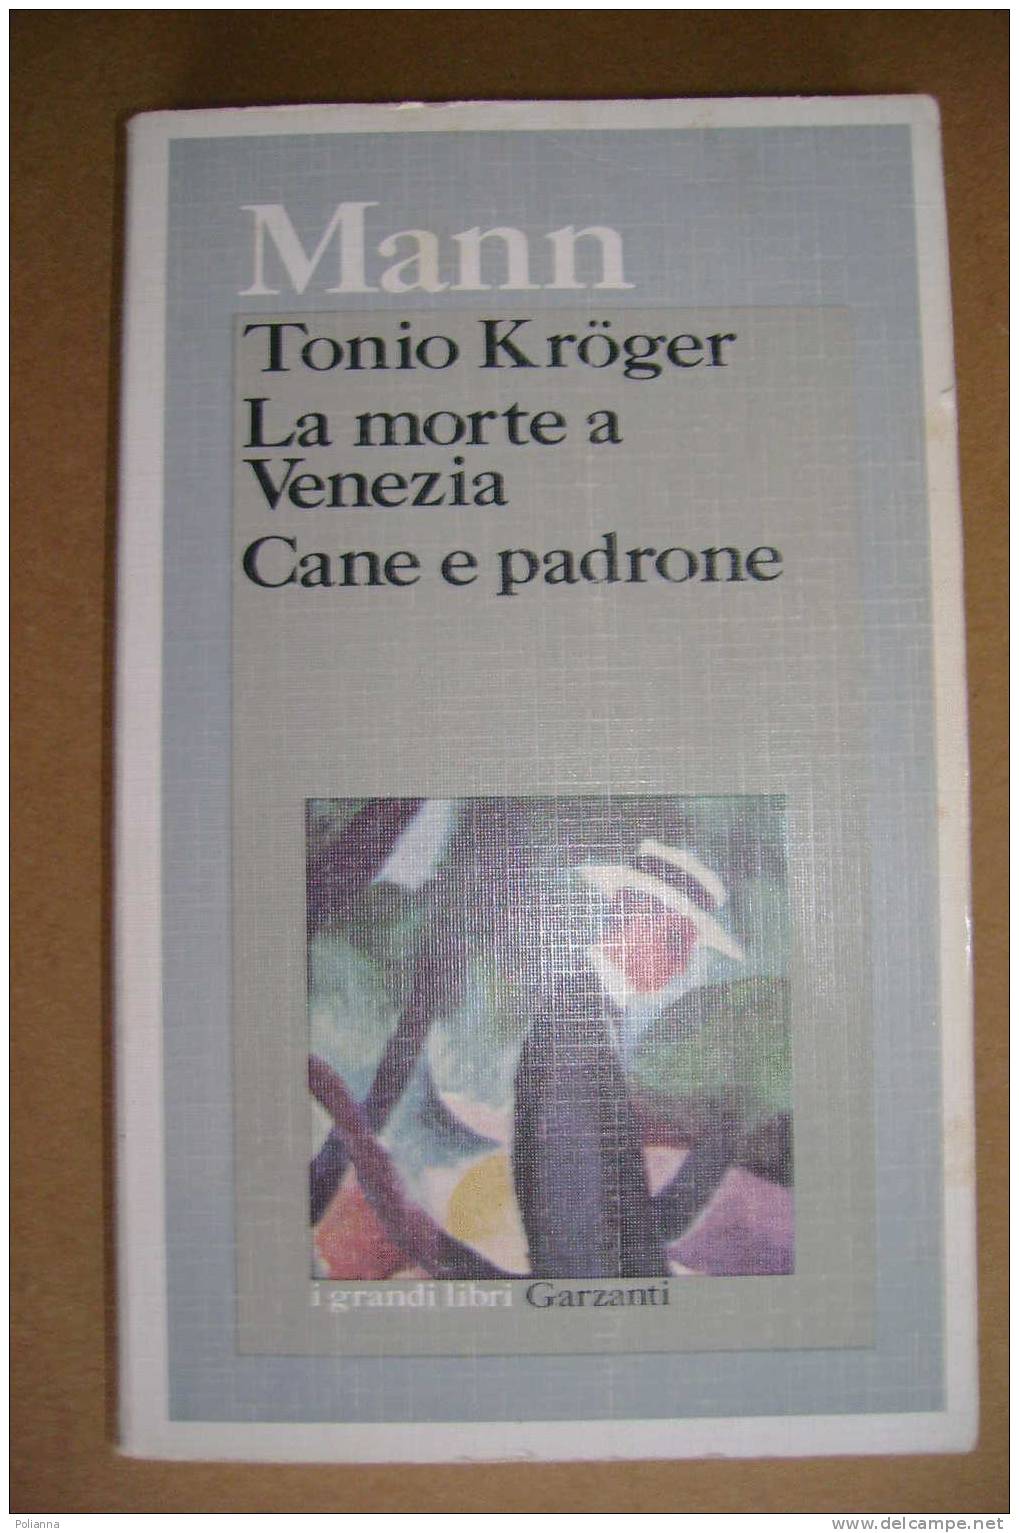 PAH/29 Mann TONIO KROGER - LA MORTE A VENEZIA - CANE E PADRONE I Grandi Libri  Garzanti 1992 - Nouvelles, Contes